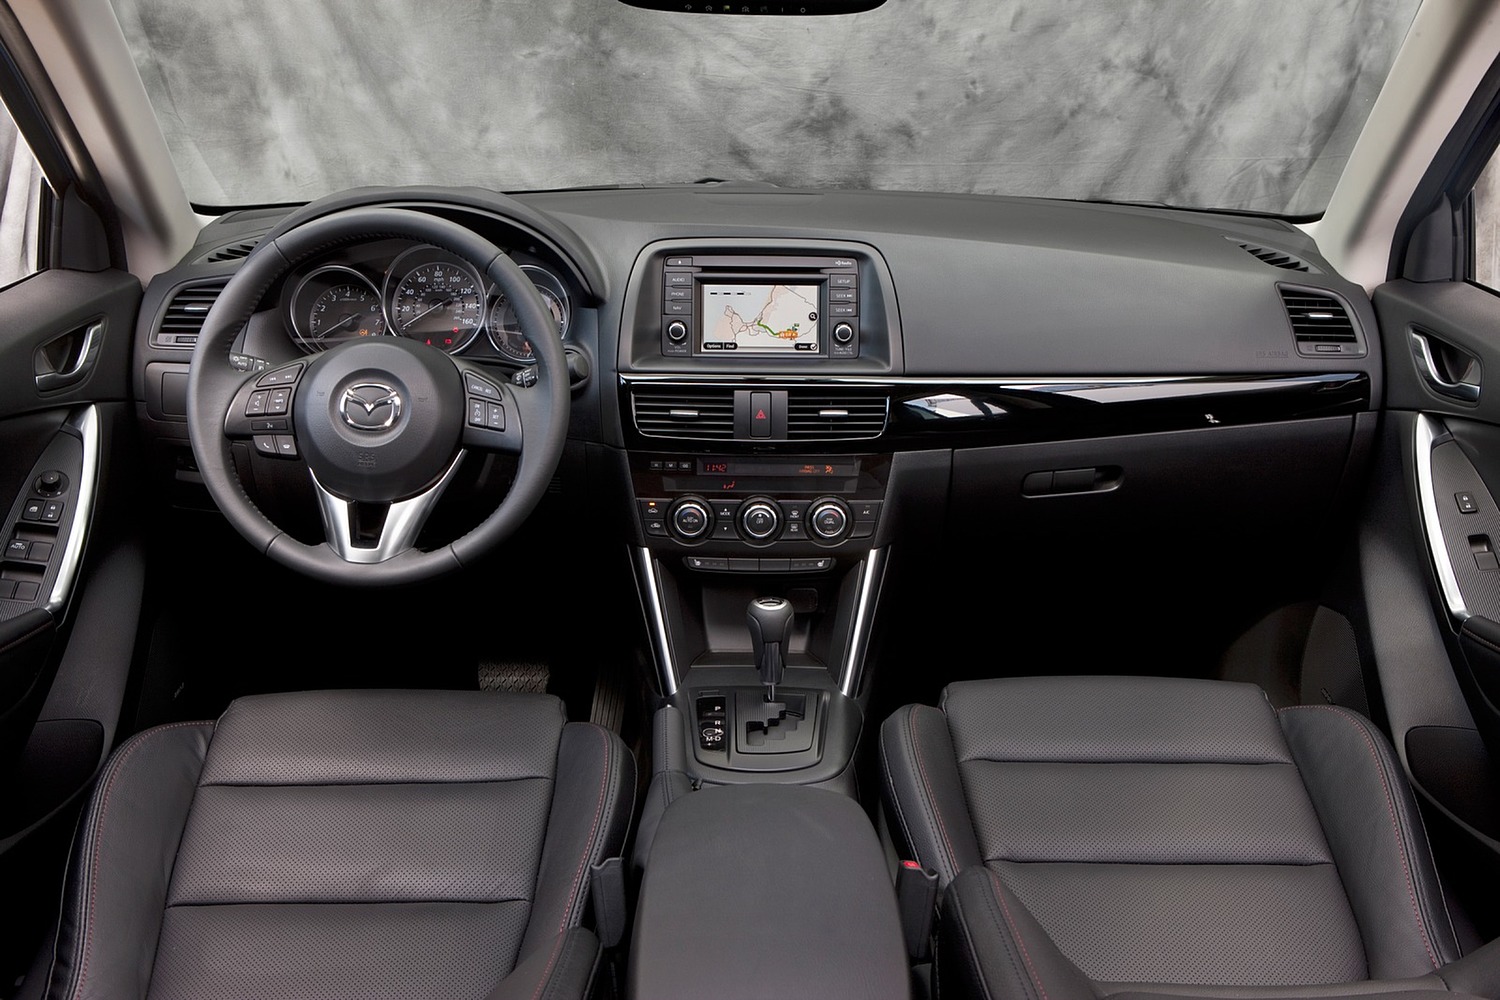 Mazda CX-5 Grand Touring 4dr SUV Dashboard (2014 model year shown)